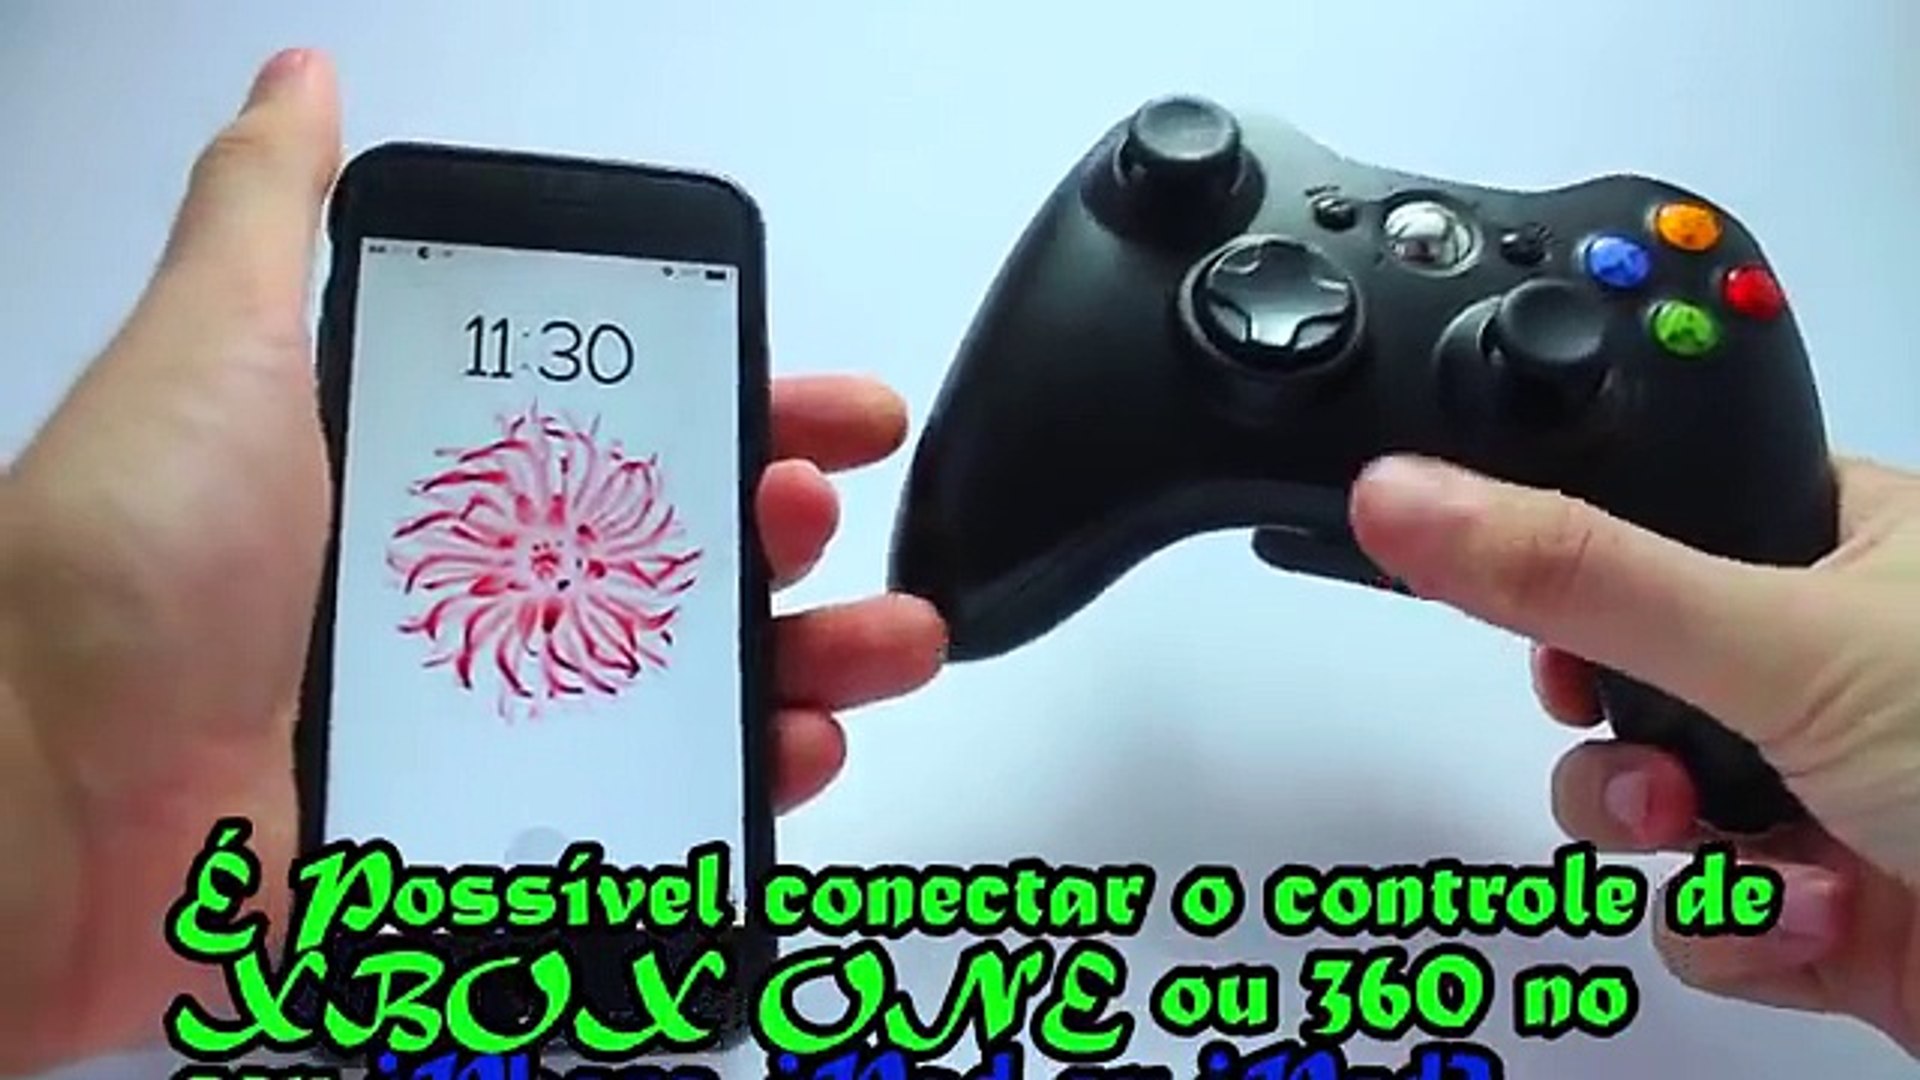 Conectar controle do Xbox one e 360 no iPhone, iPad e iPod é Possível ? -  video Dailymotion